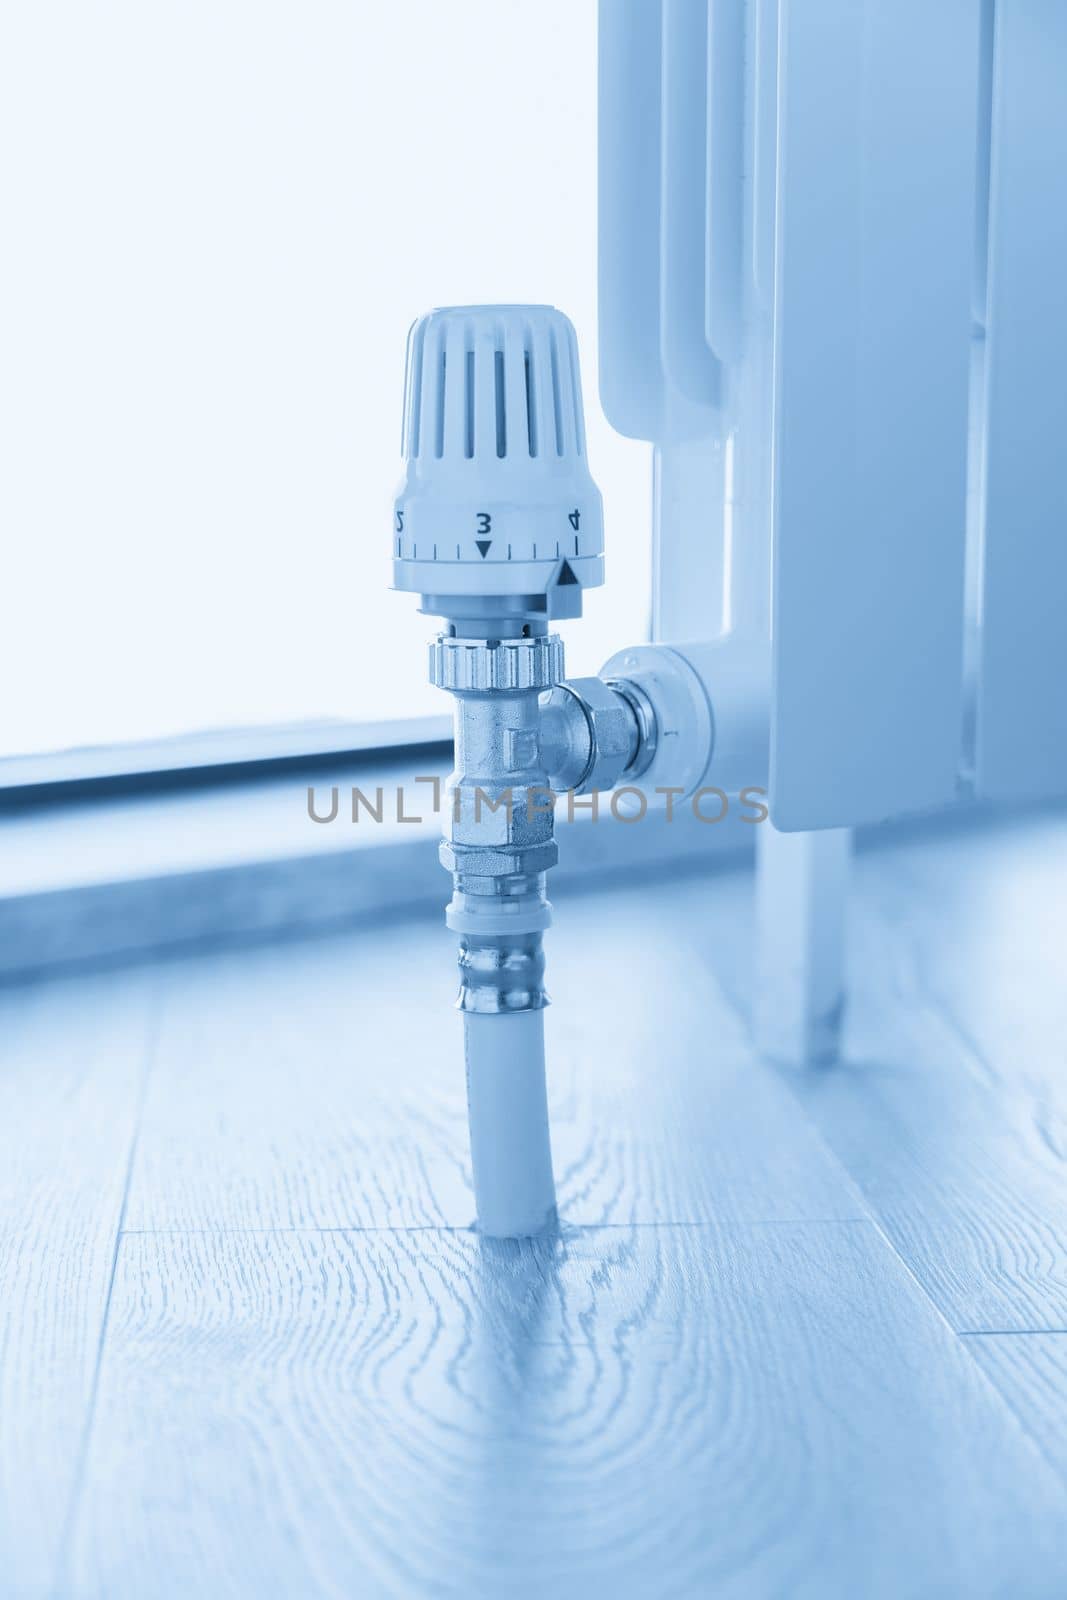 thermostat valve on white radiator close up by Mariakray